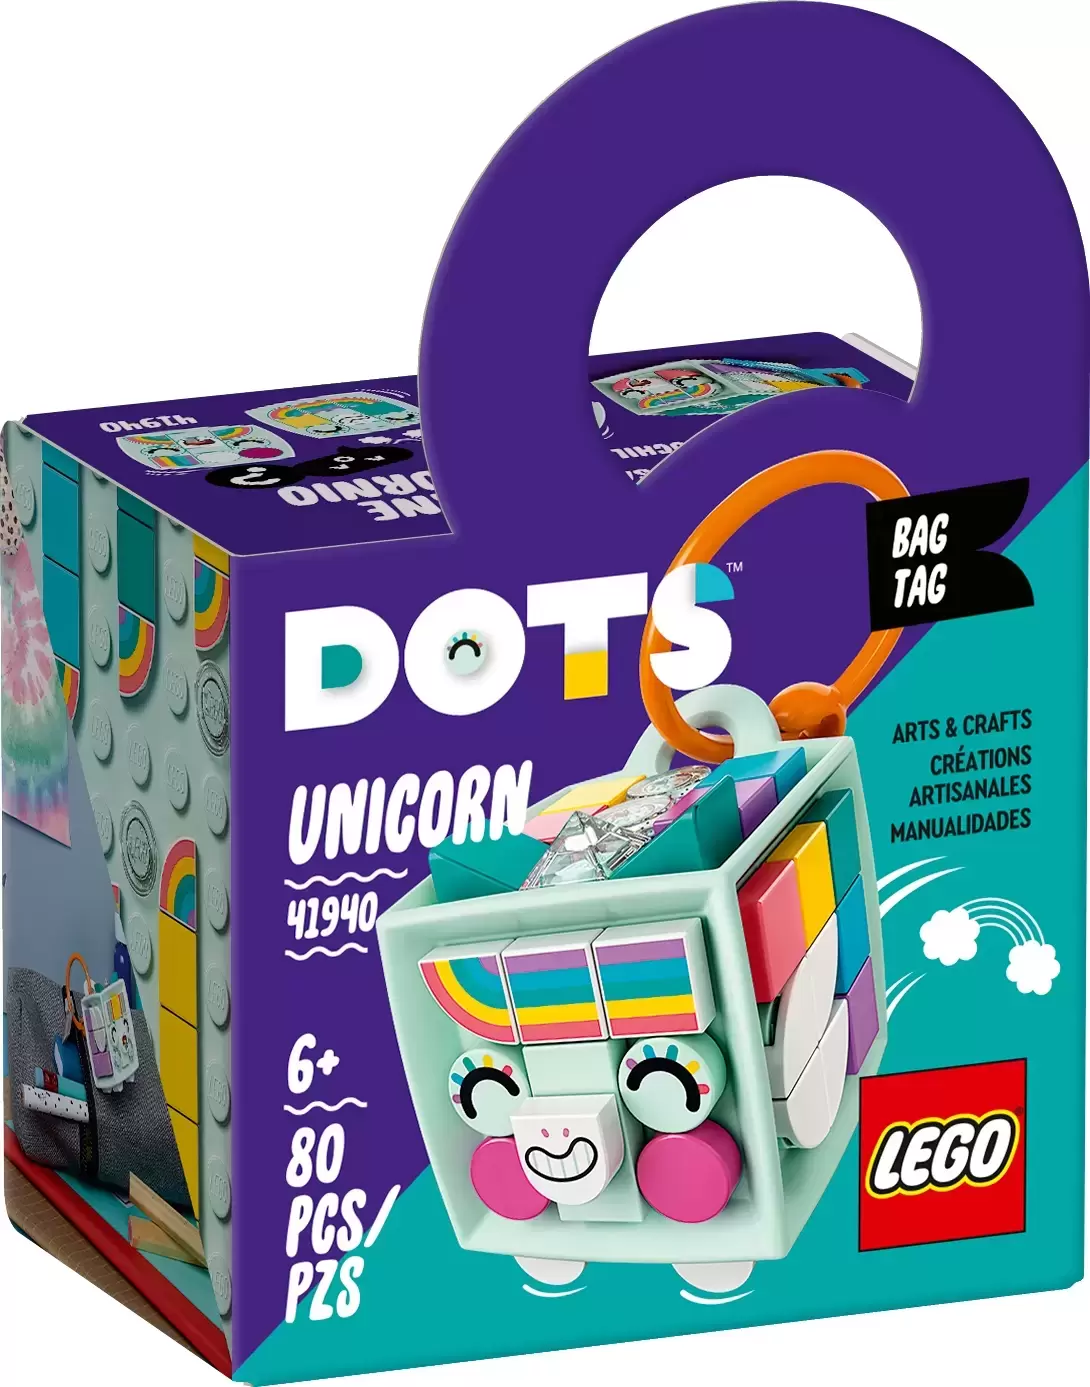 Unicorn Bag Tag - LEGO Dots set 41940